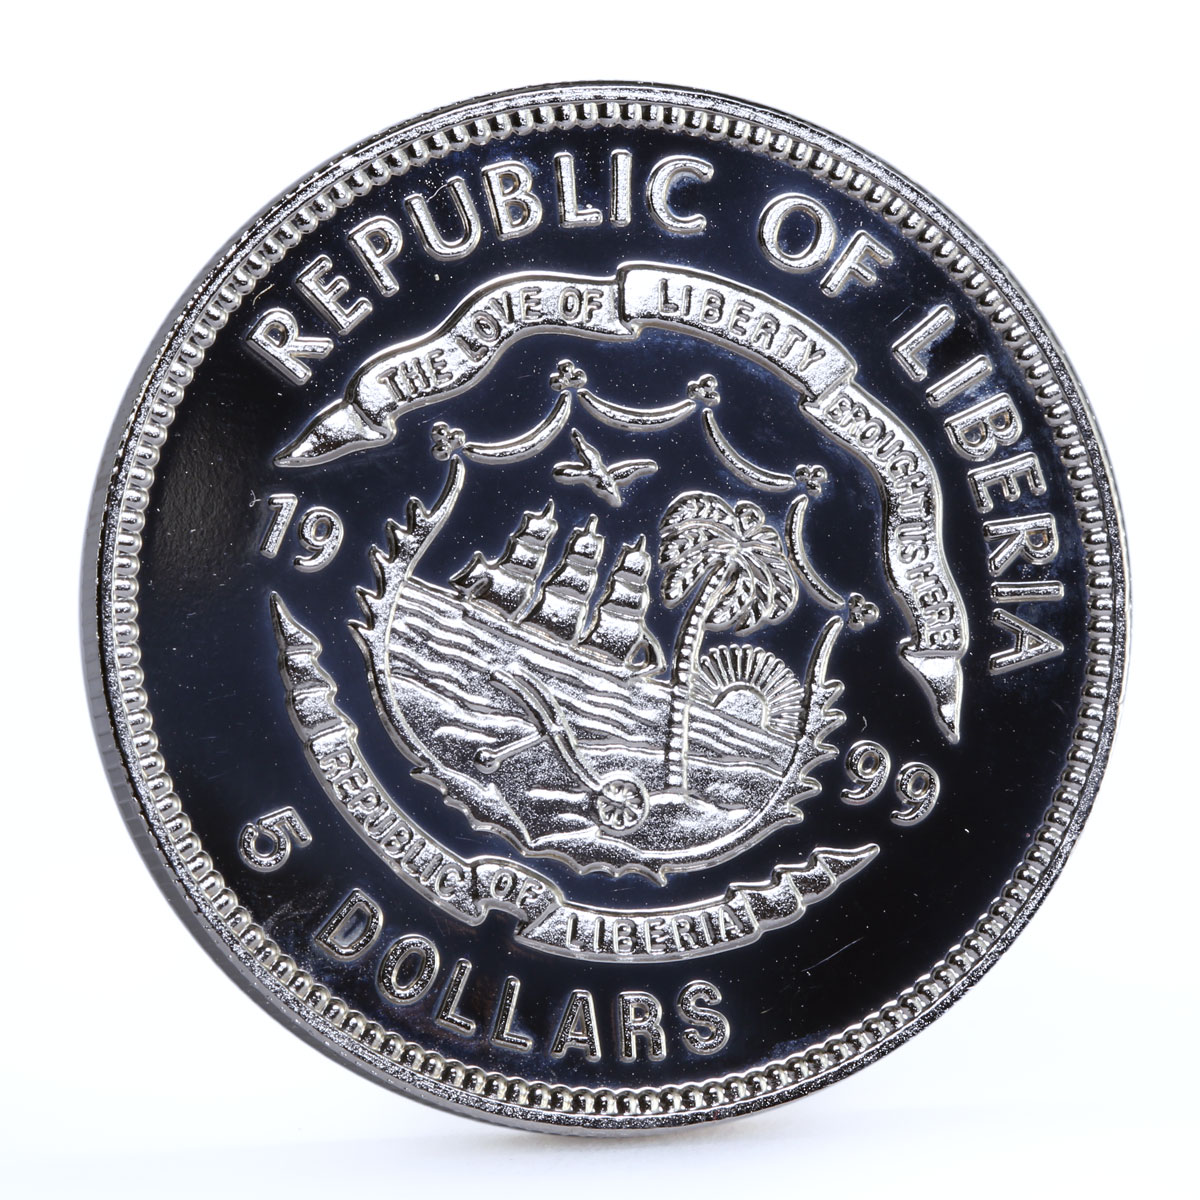 Liberia 5 dollars Transrapid-08 Train Railway Railroad Express CuNi coin 1999